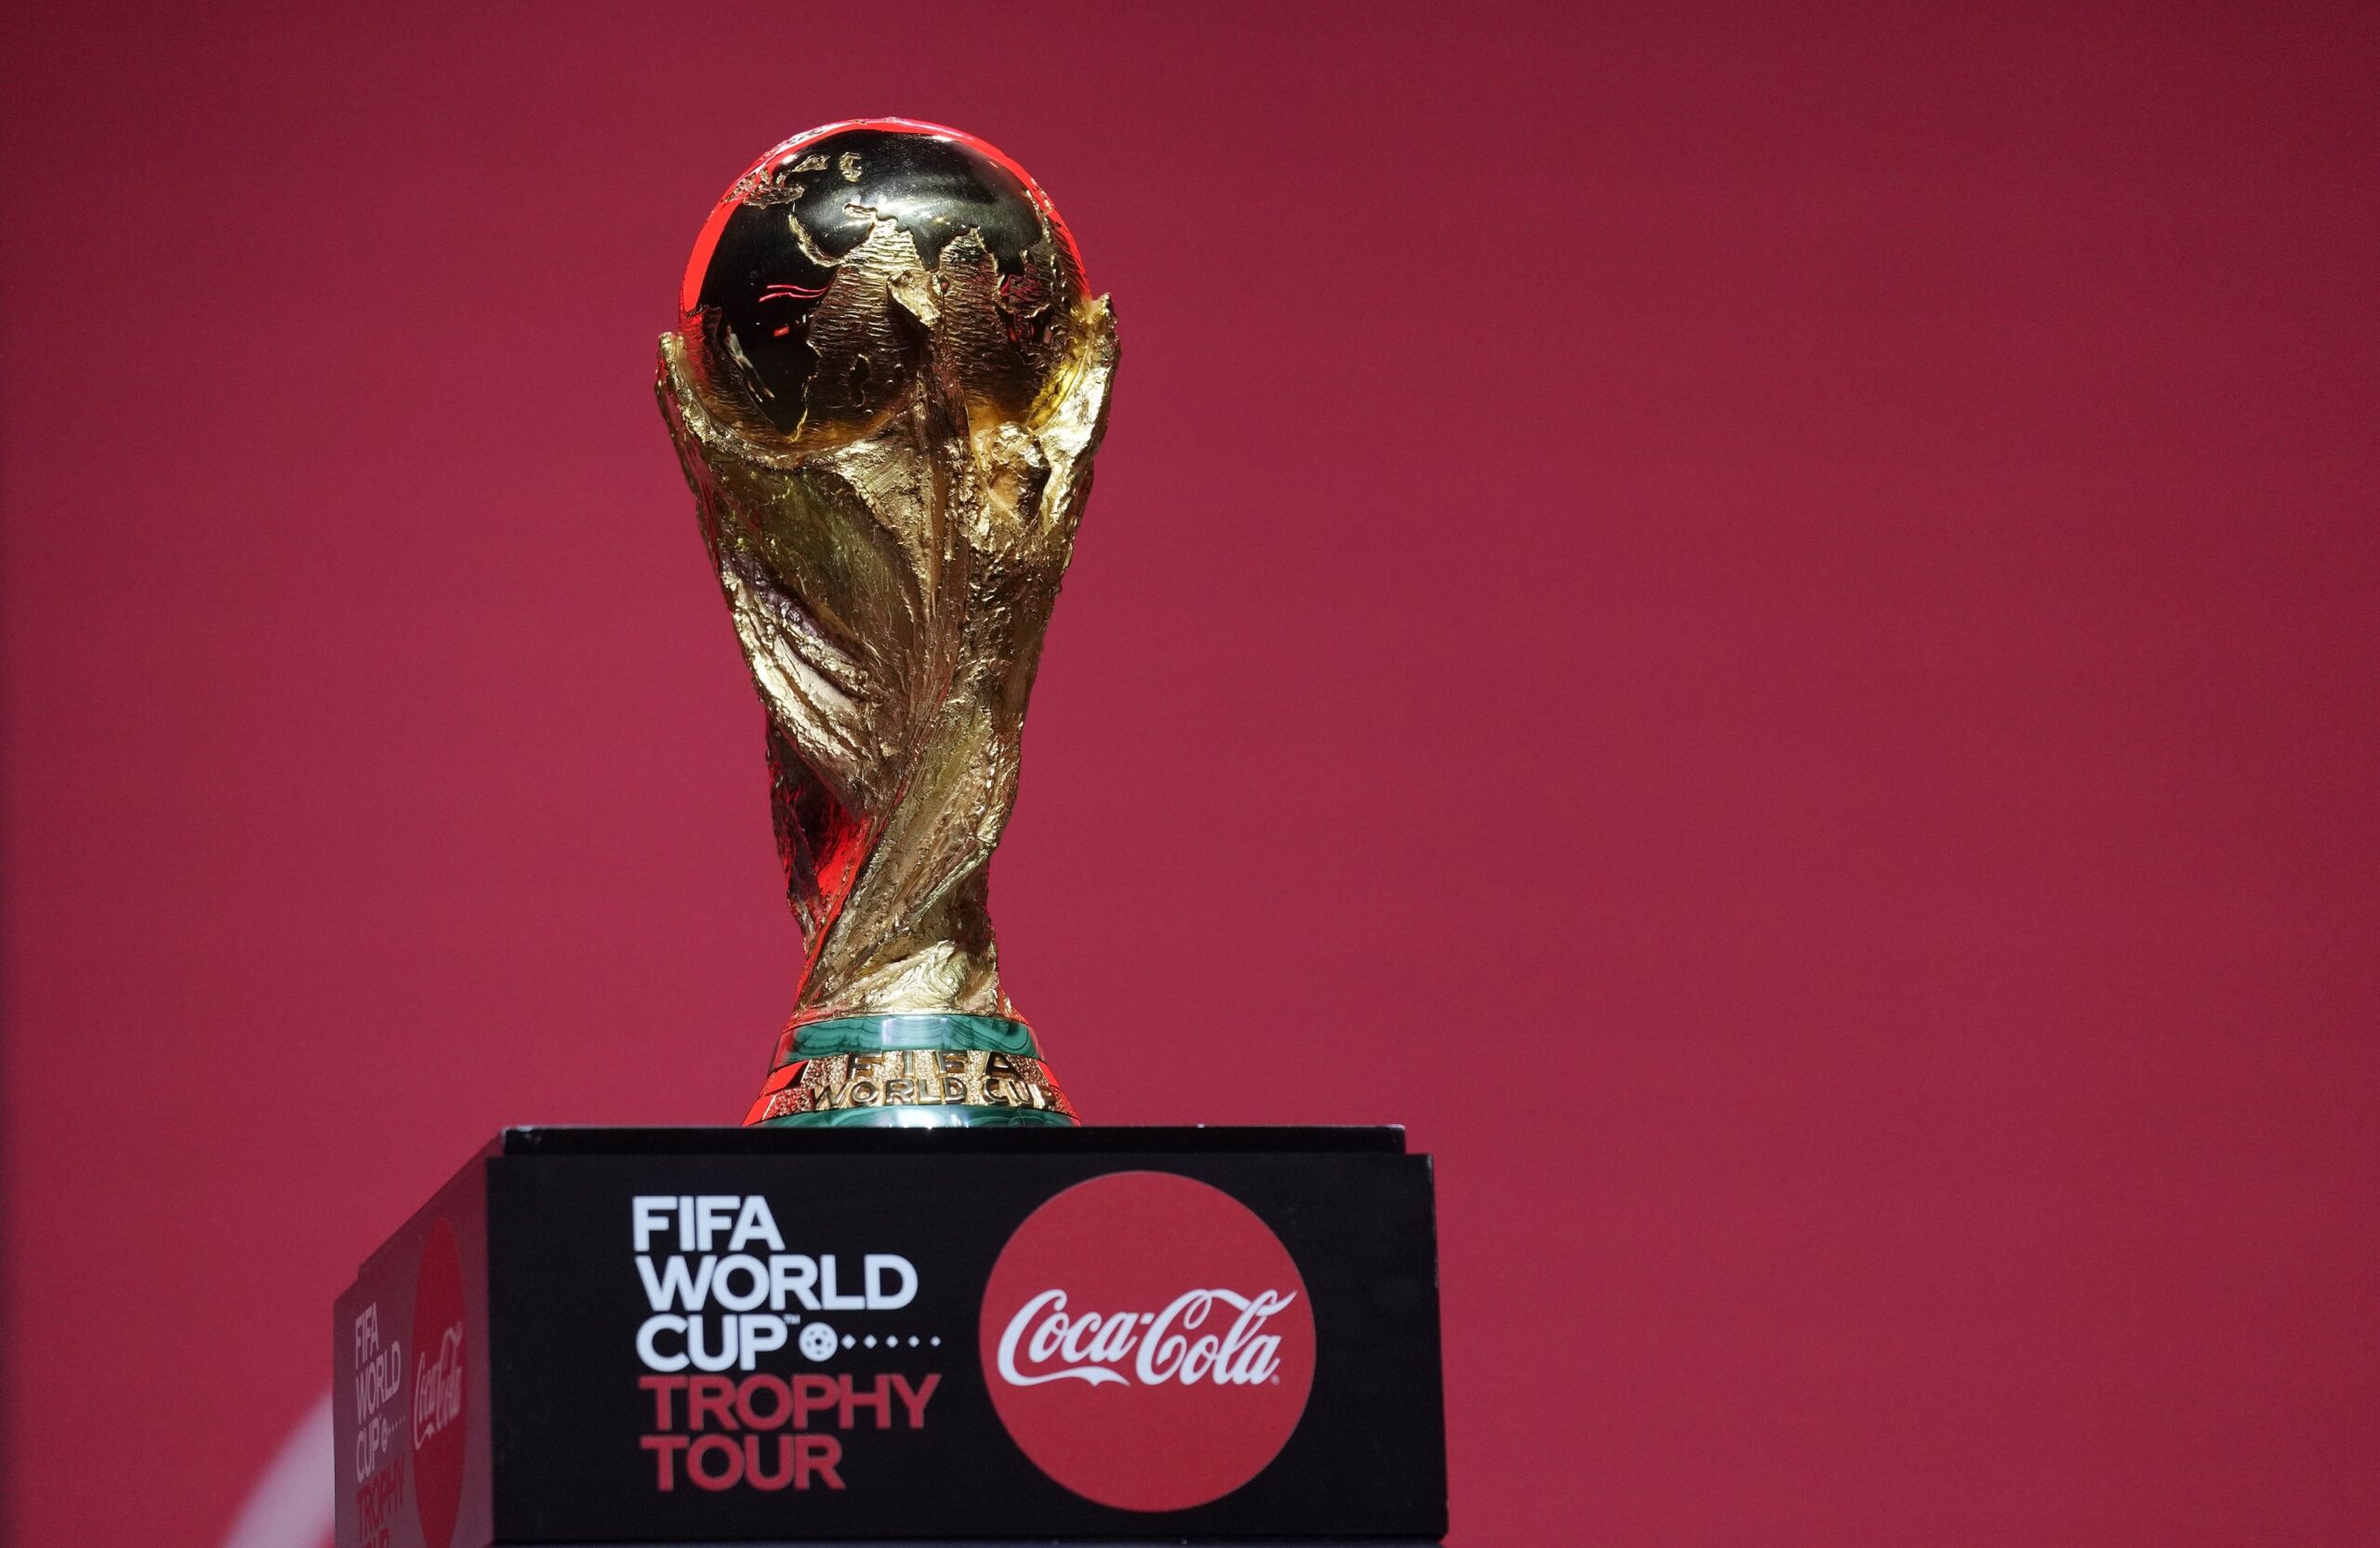 Emirates Qatar FIFA World Cup Trophy